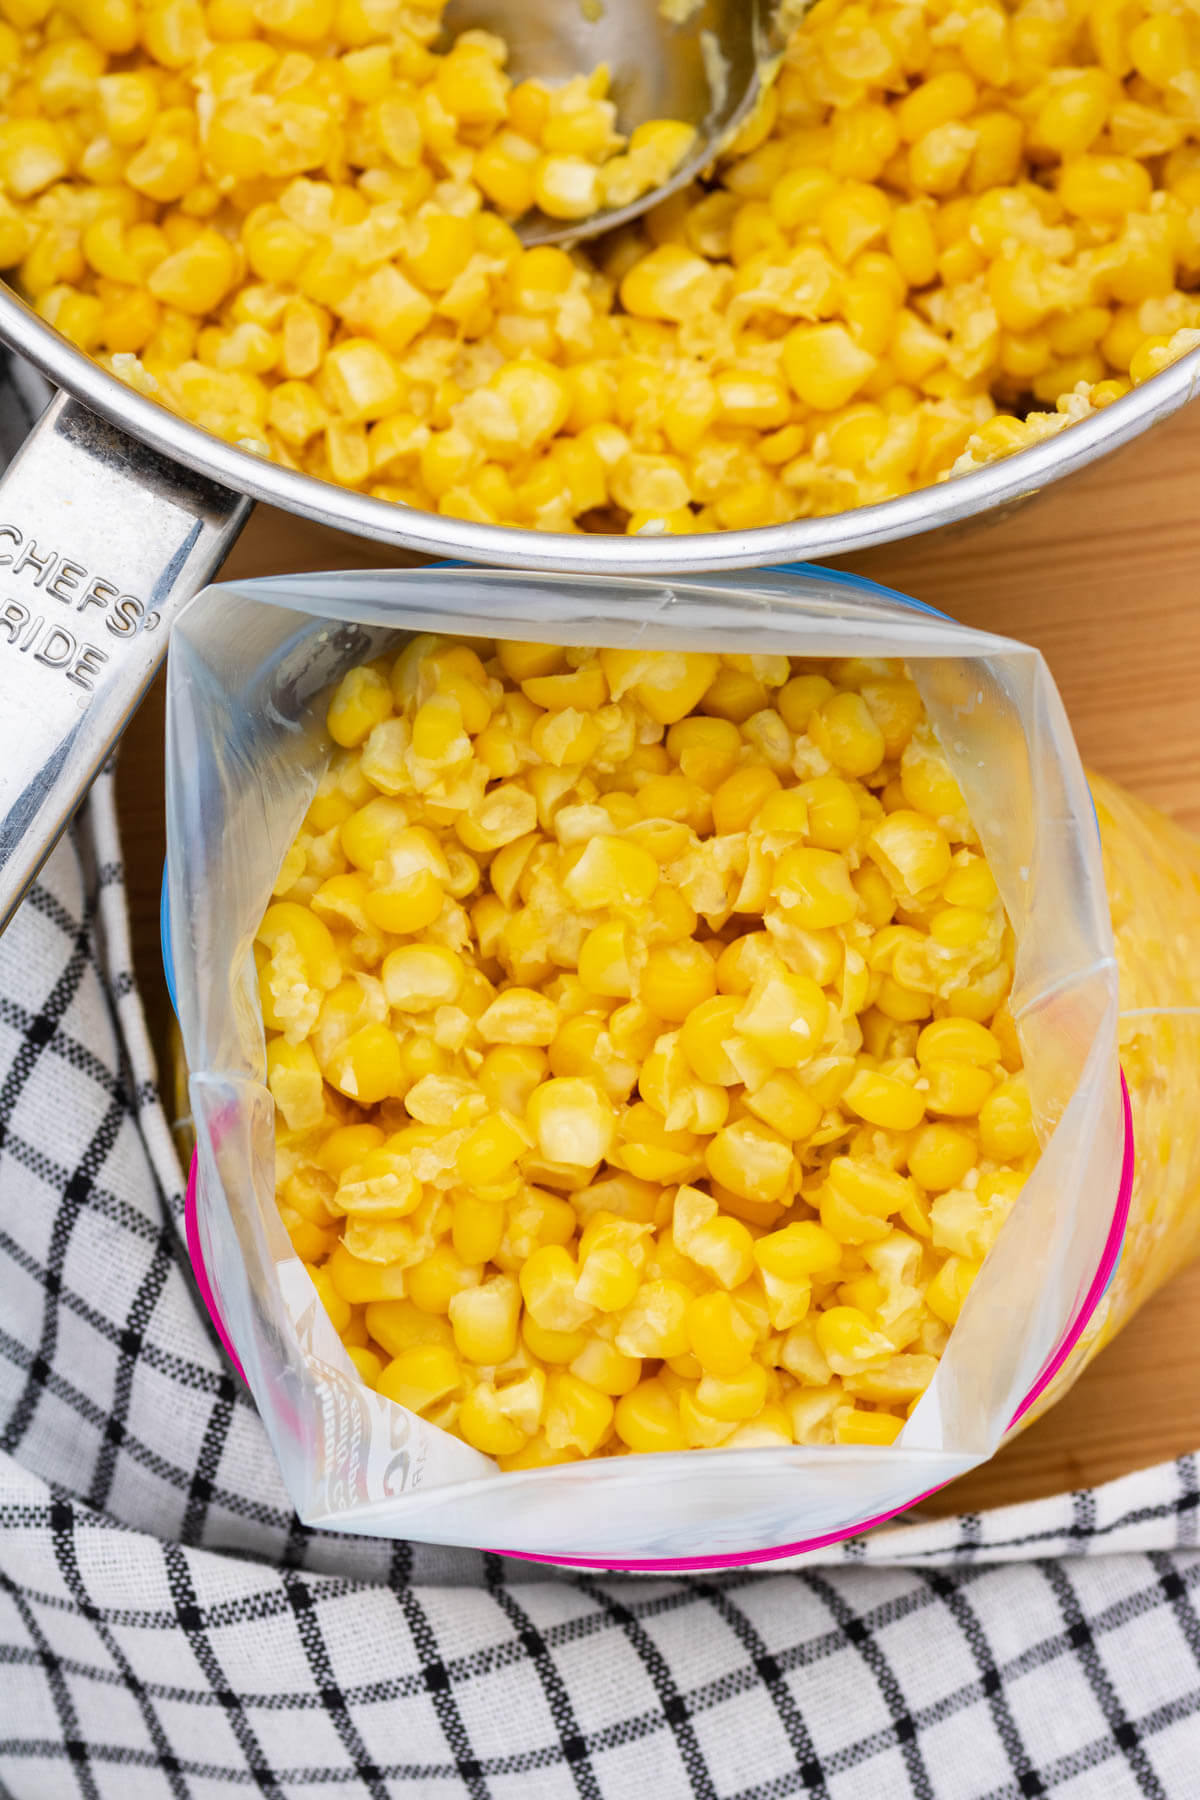 A freezer bag full of bright yellow corn kernels beside a saucepan of corn.